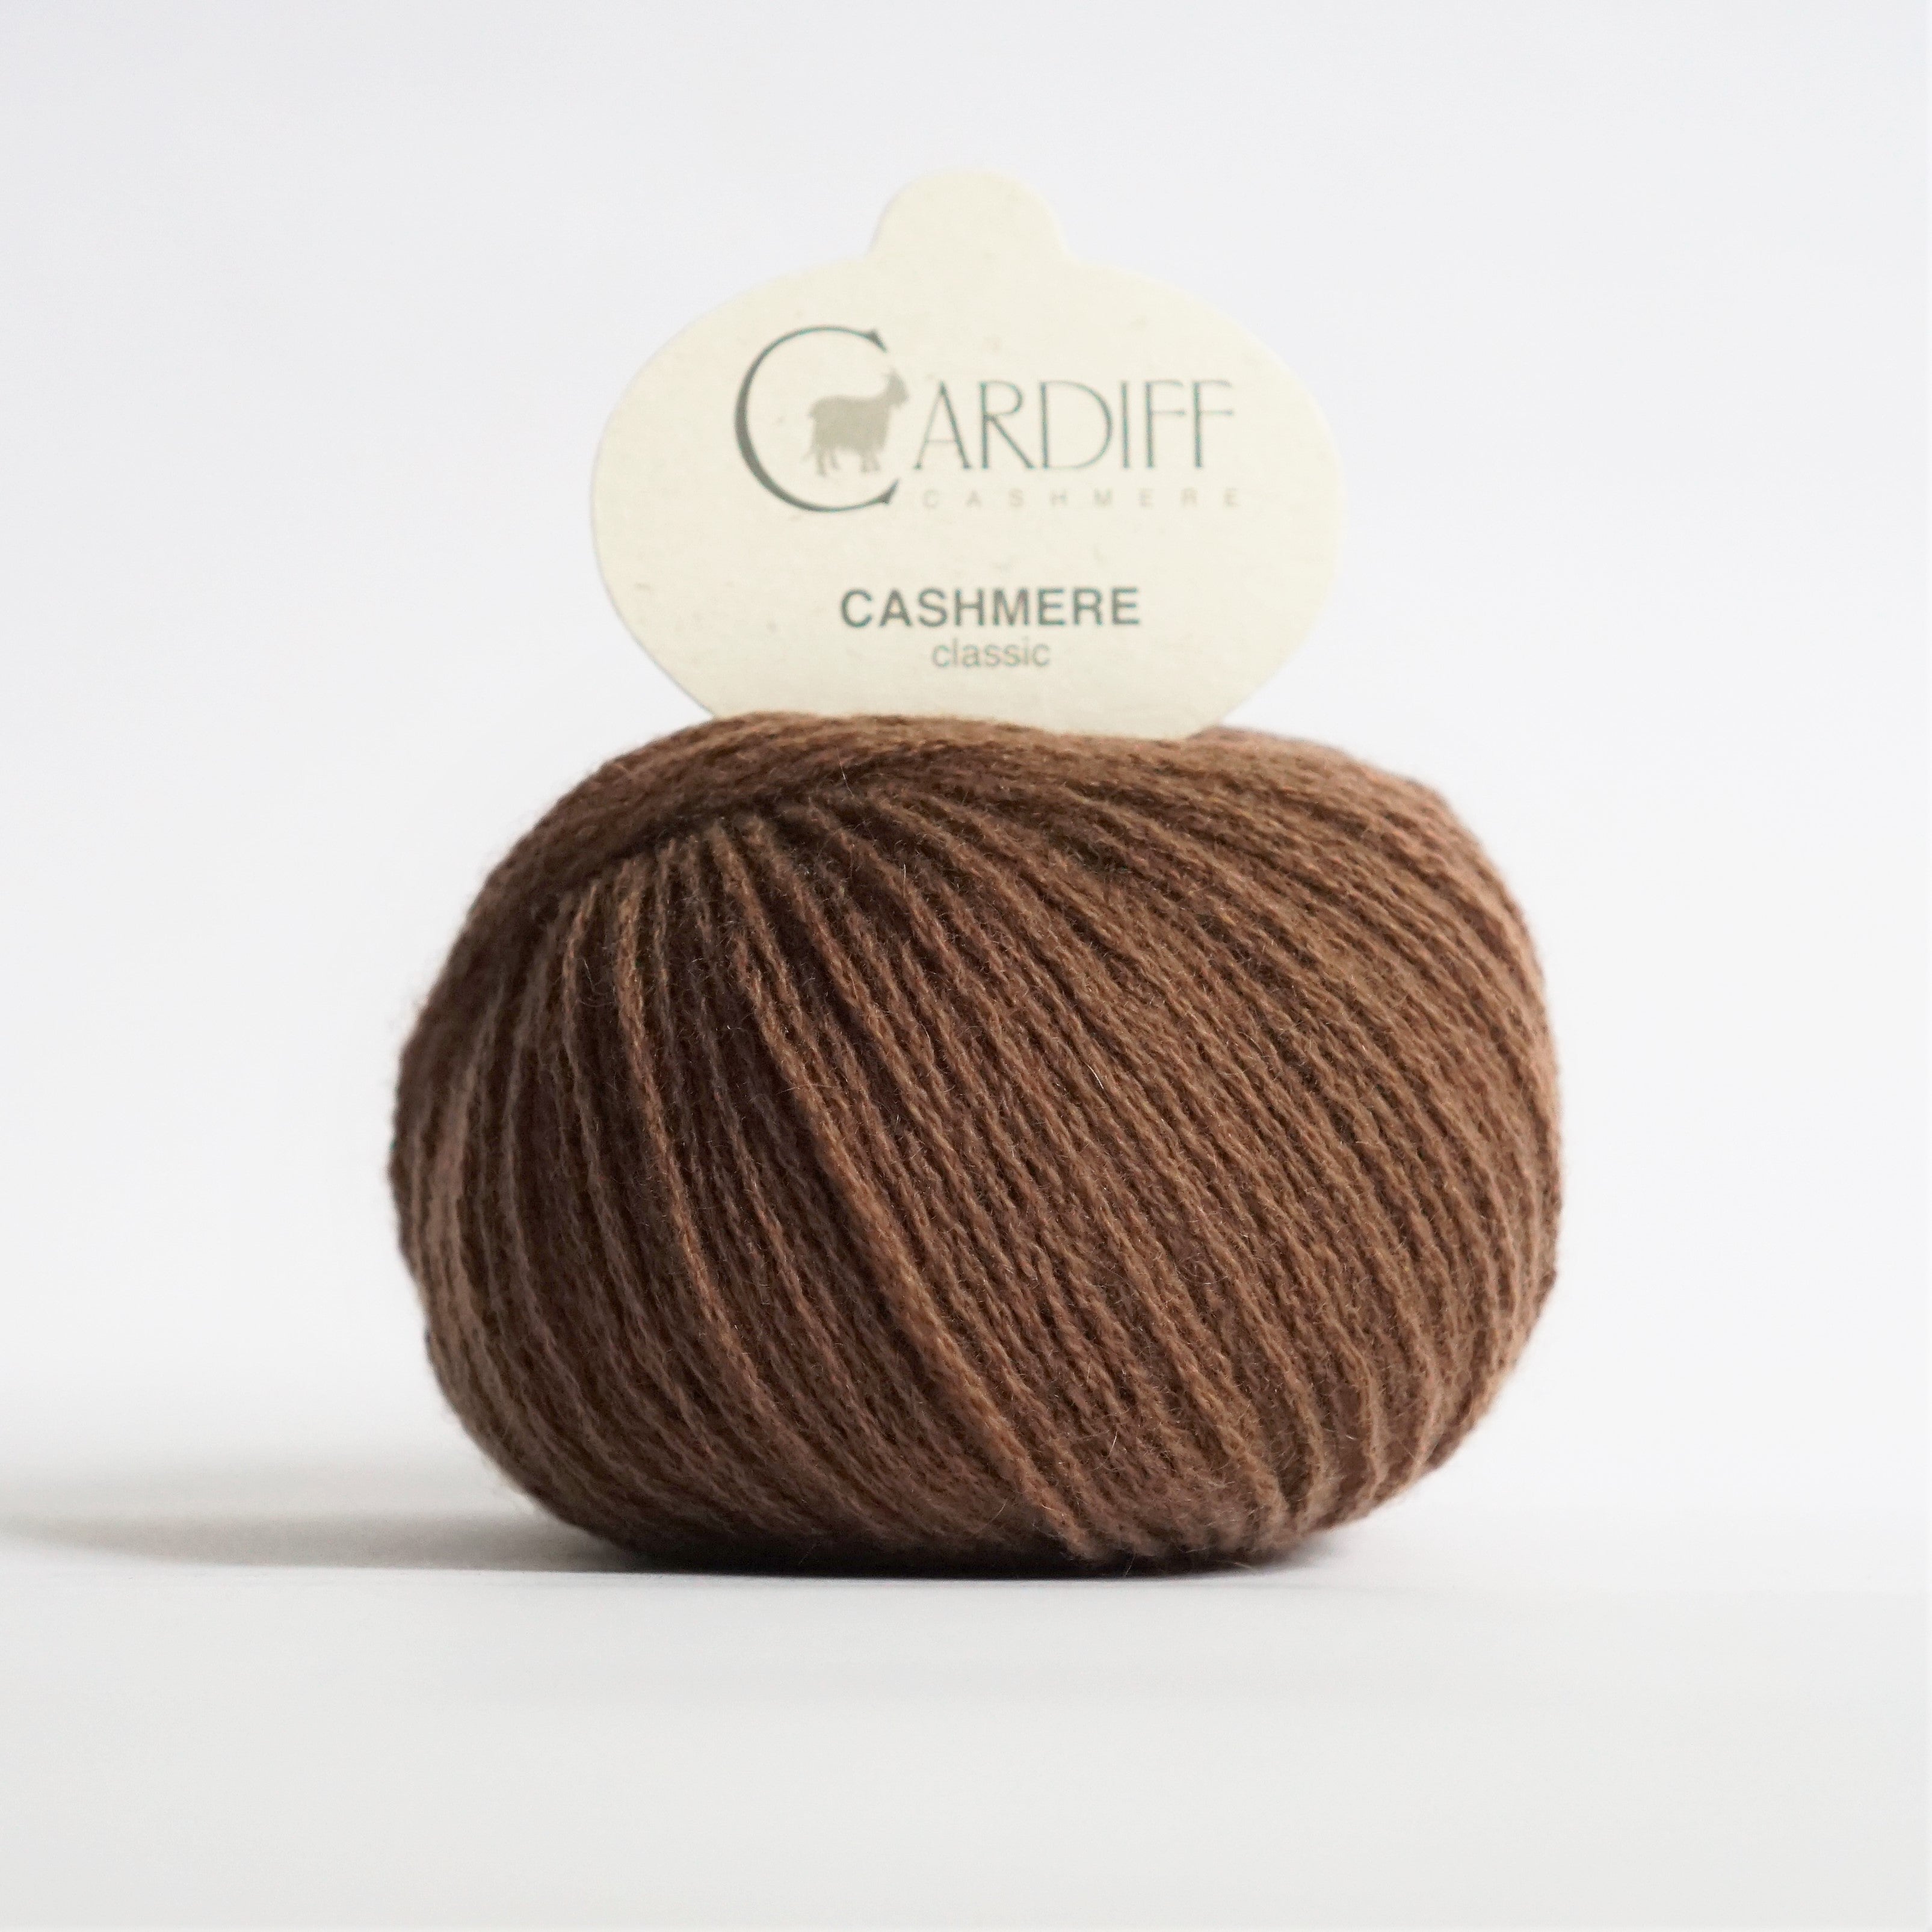 cardiff cashmere classic